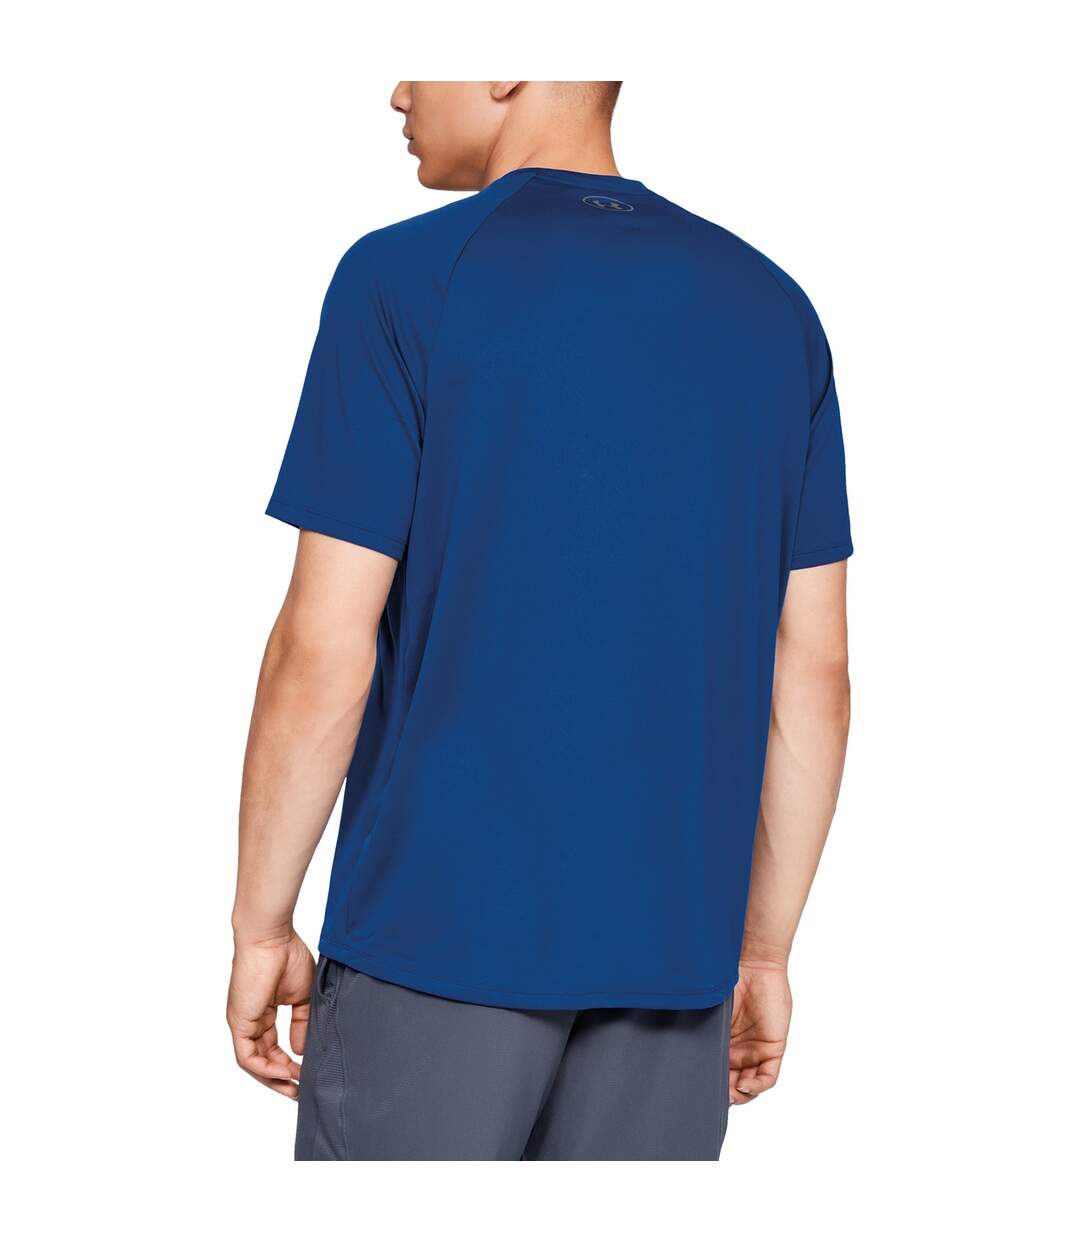 Under Armour Mens Tech T-Shirt (Royal Blue/Graphite) - UTRW7749